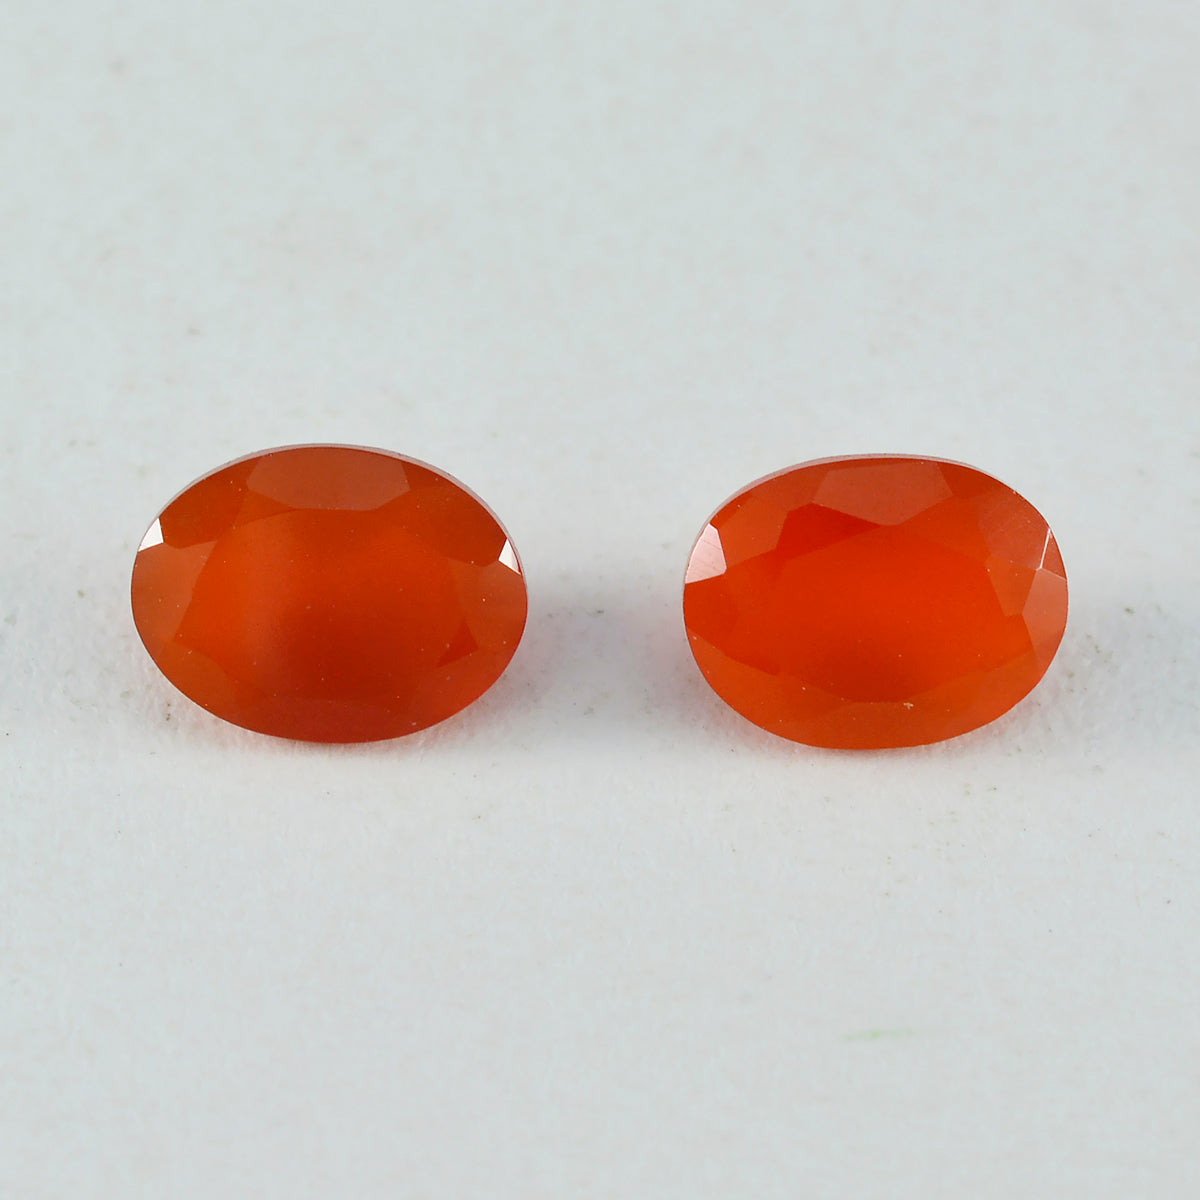 Riyogems 1PC Real Red Onyx Faceted 10x14 mm Oval Shape fantastic Quality Gemstone